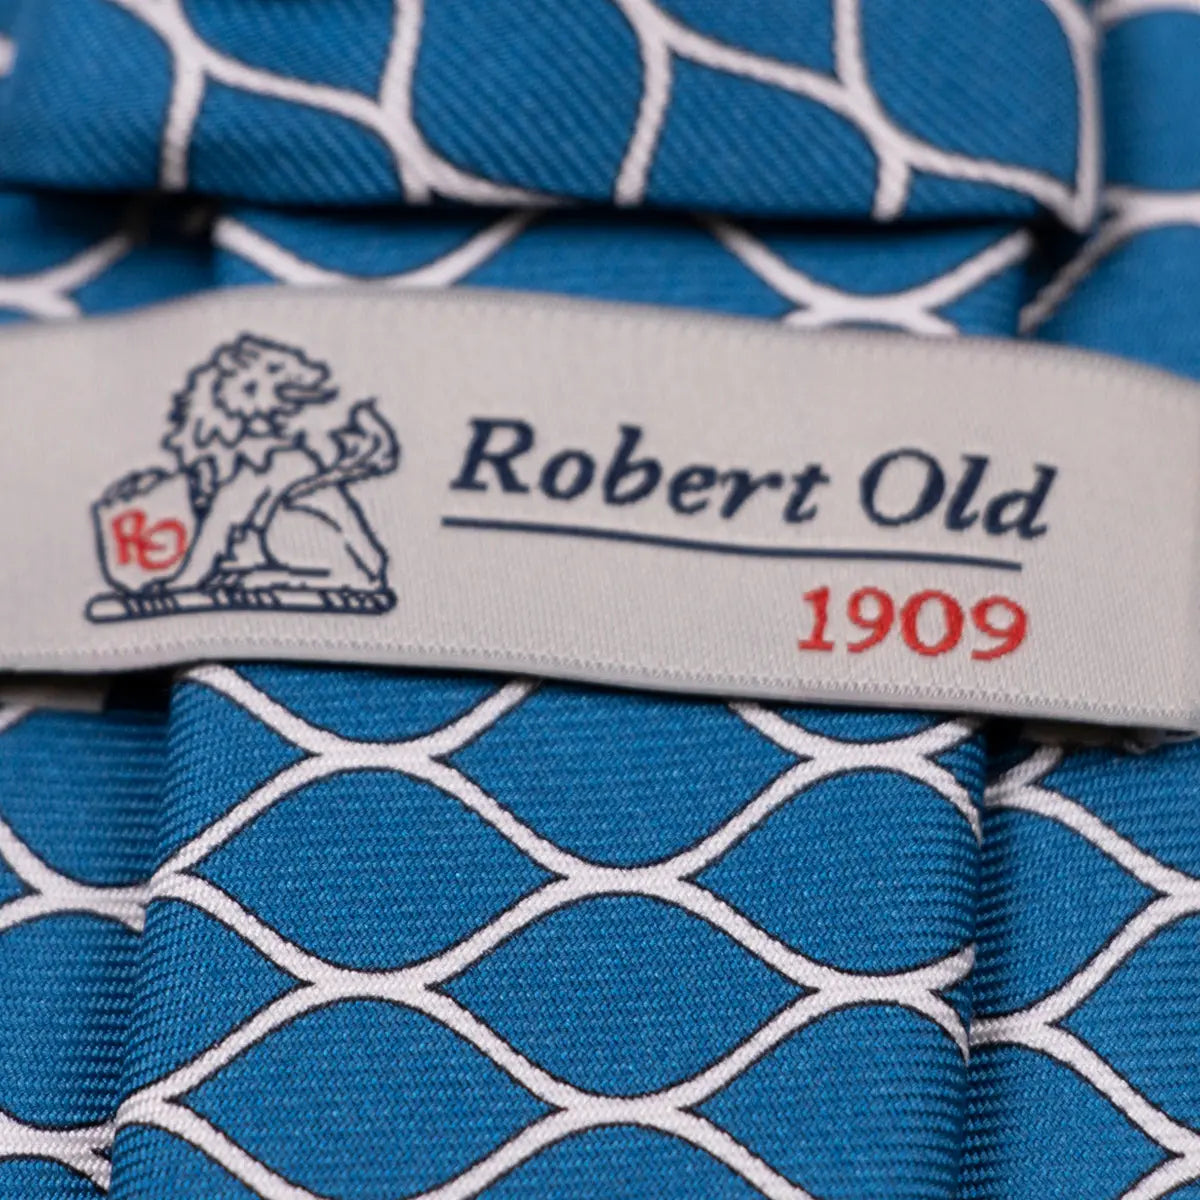 Teal 100% Silk Jacquard Tie  Robert Old   